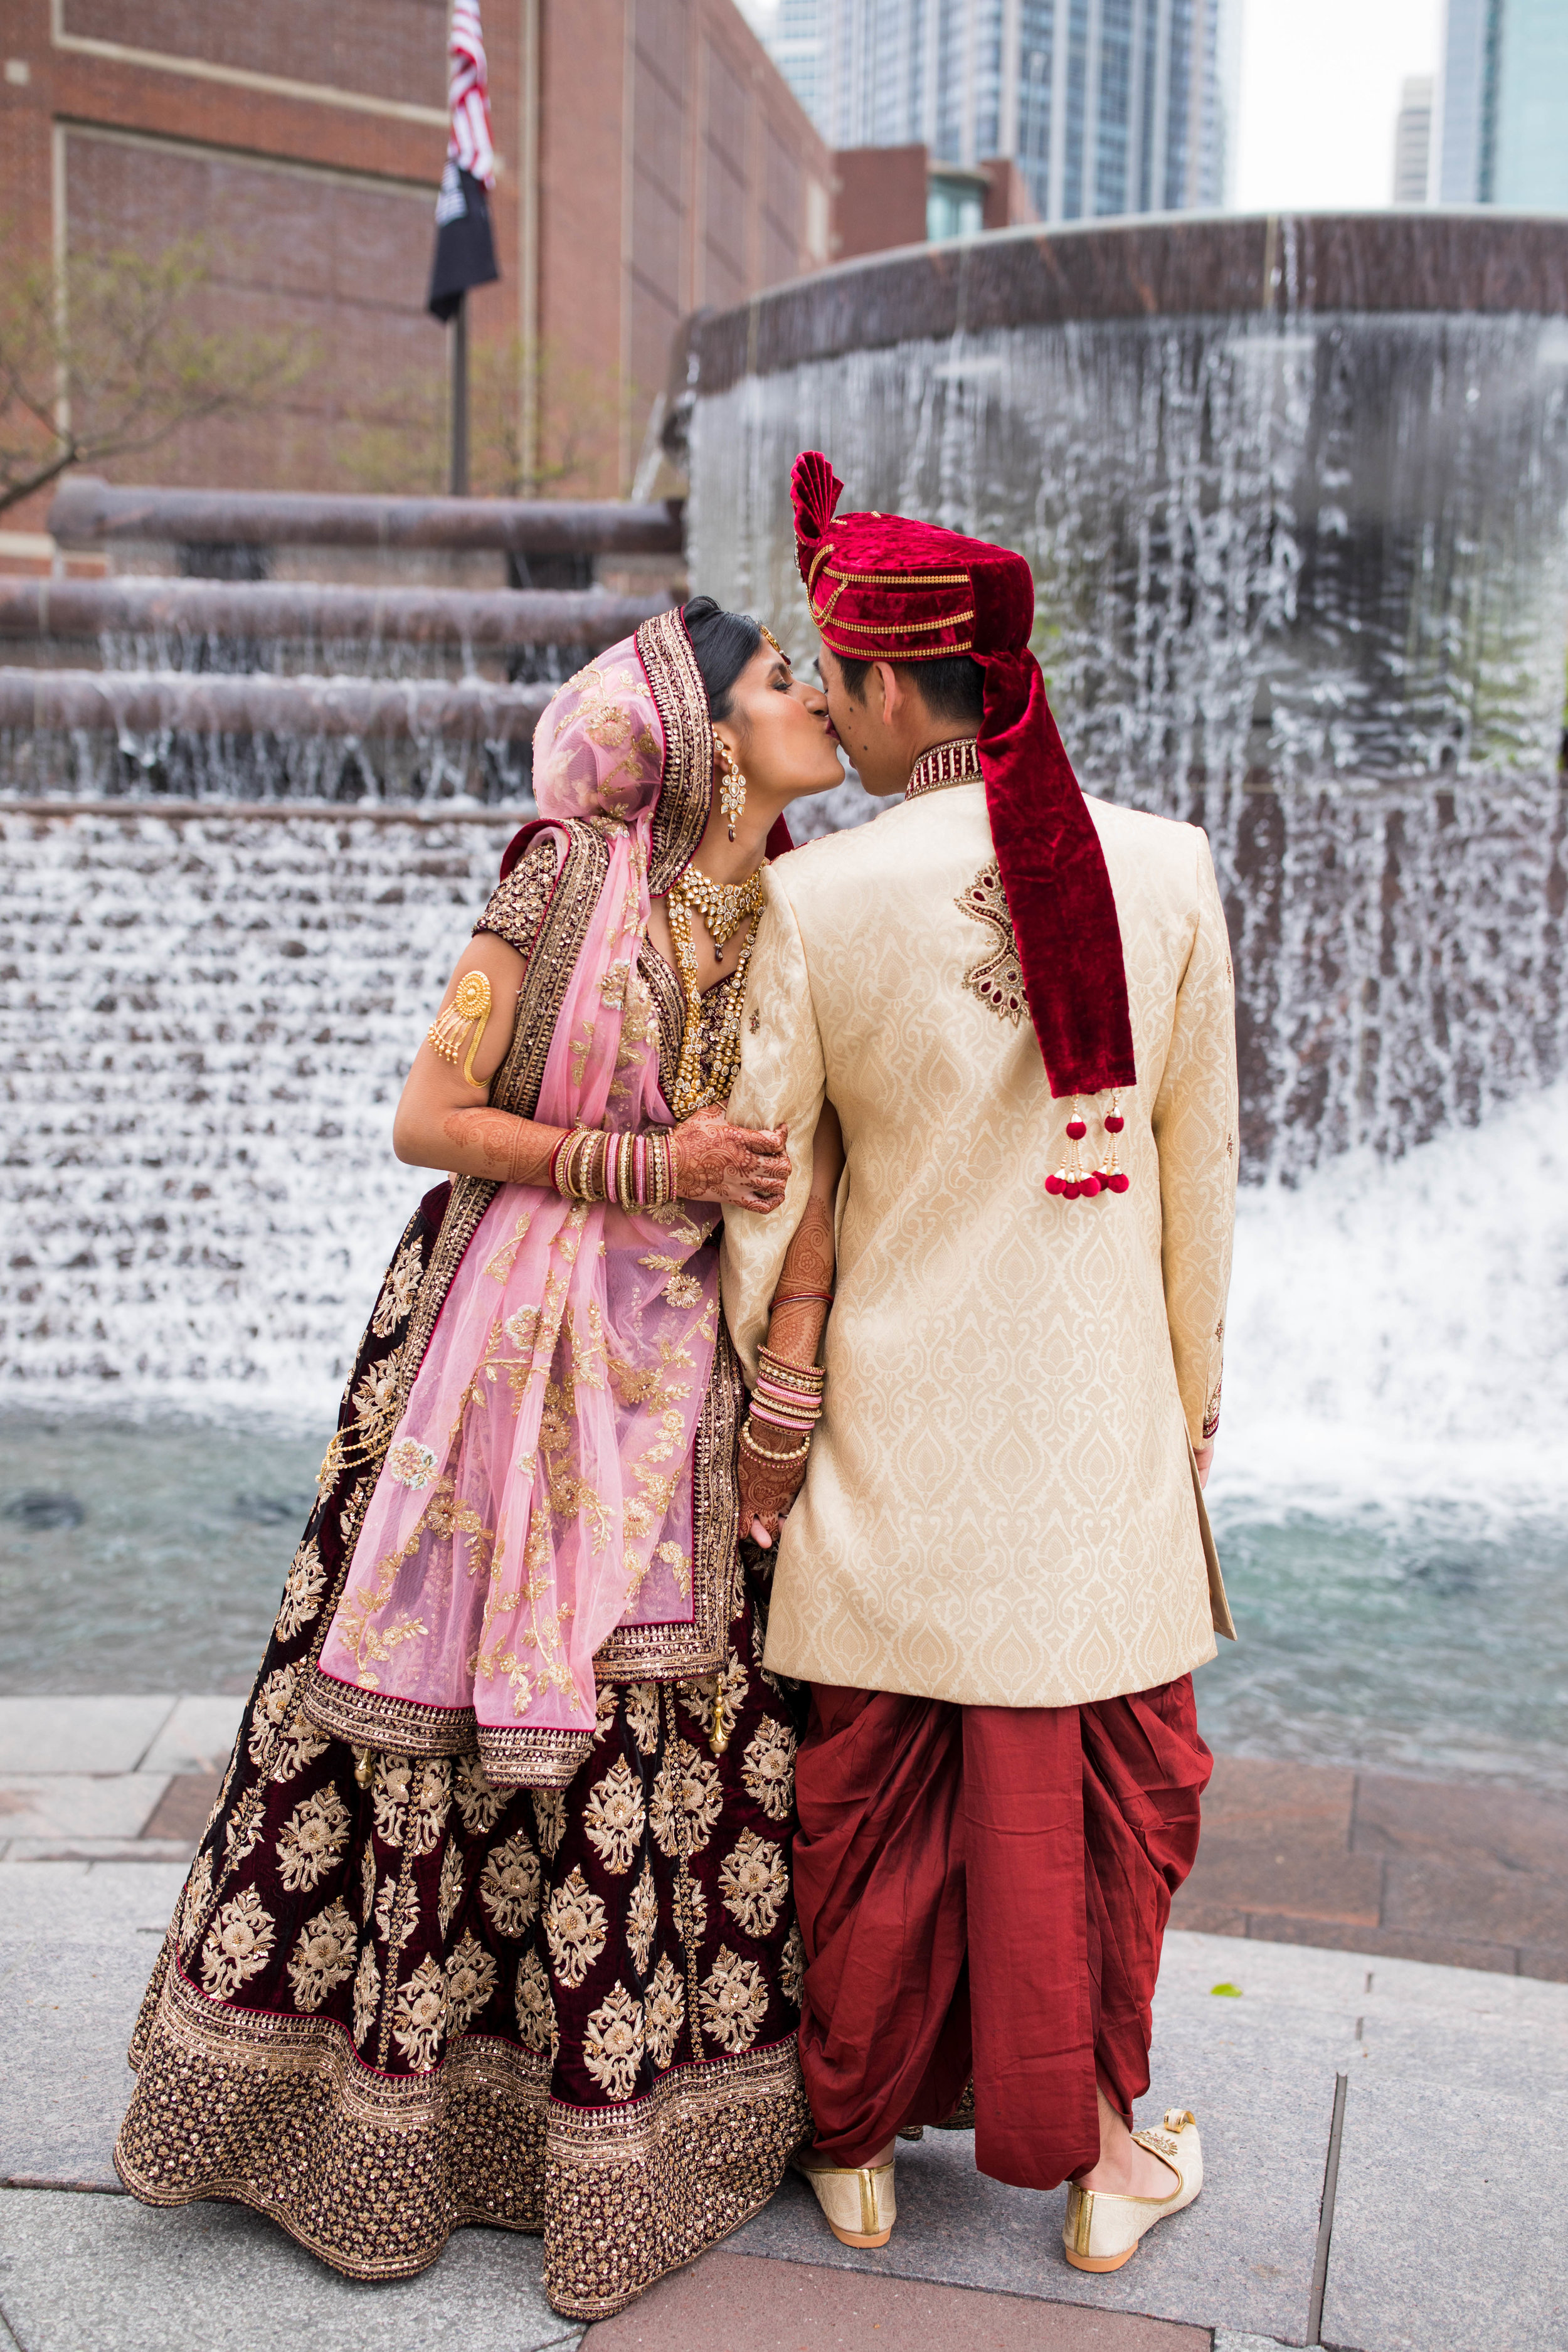 LeCapeWeddings - Chicago South Asian Wedding -51.jpg